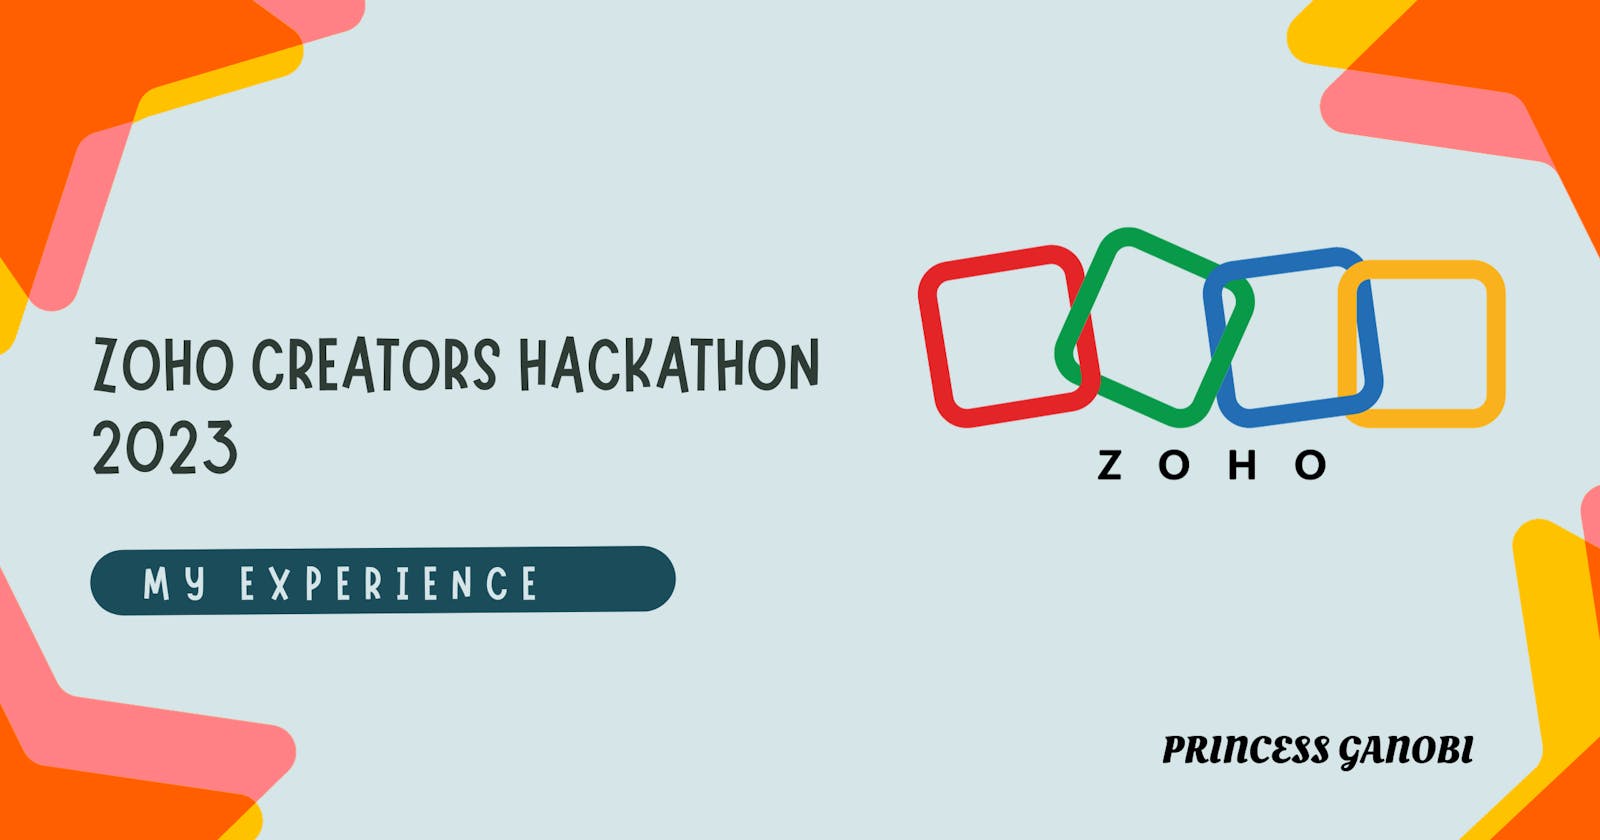 Zoho Creators Hackathon 2023: My Experience